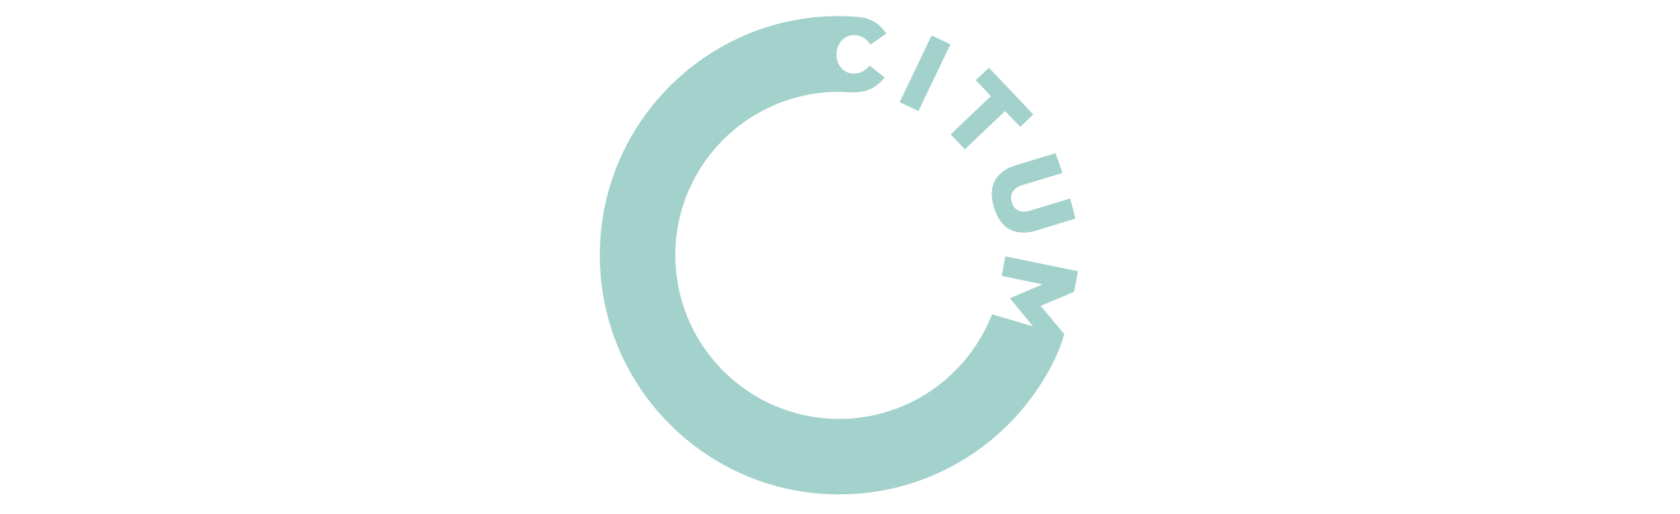 citum_blank_logo